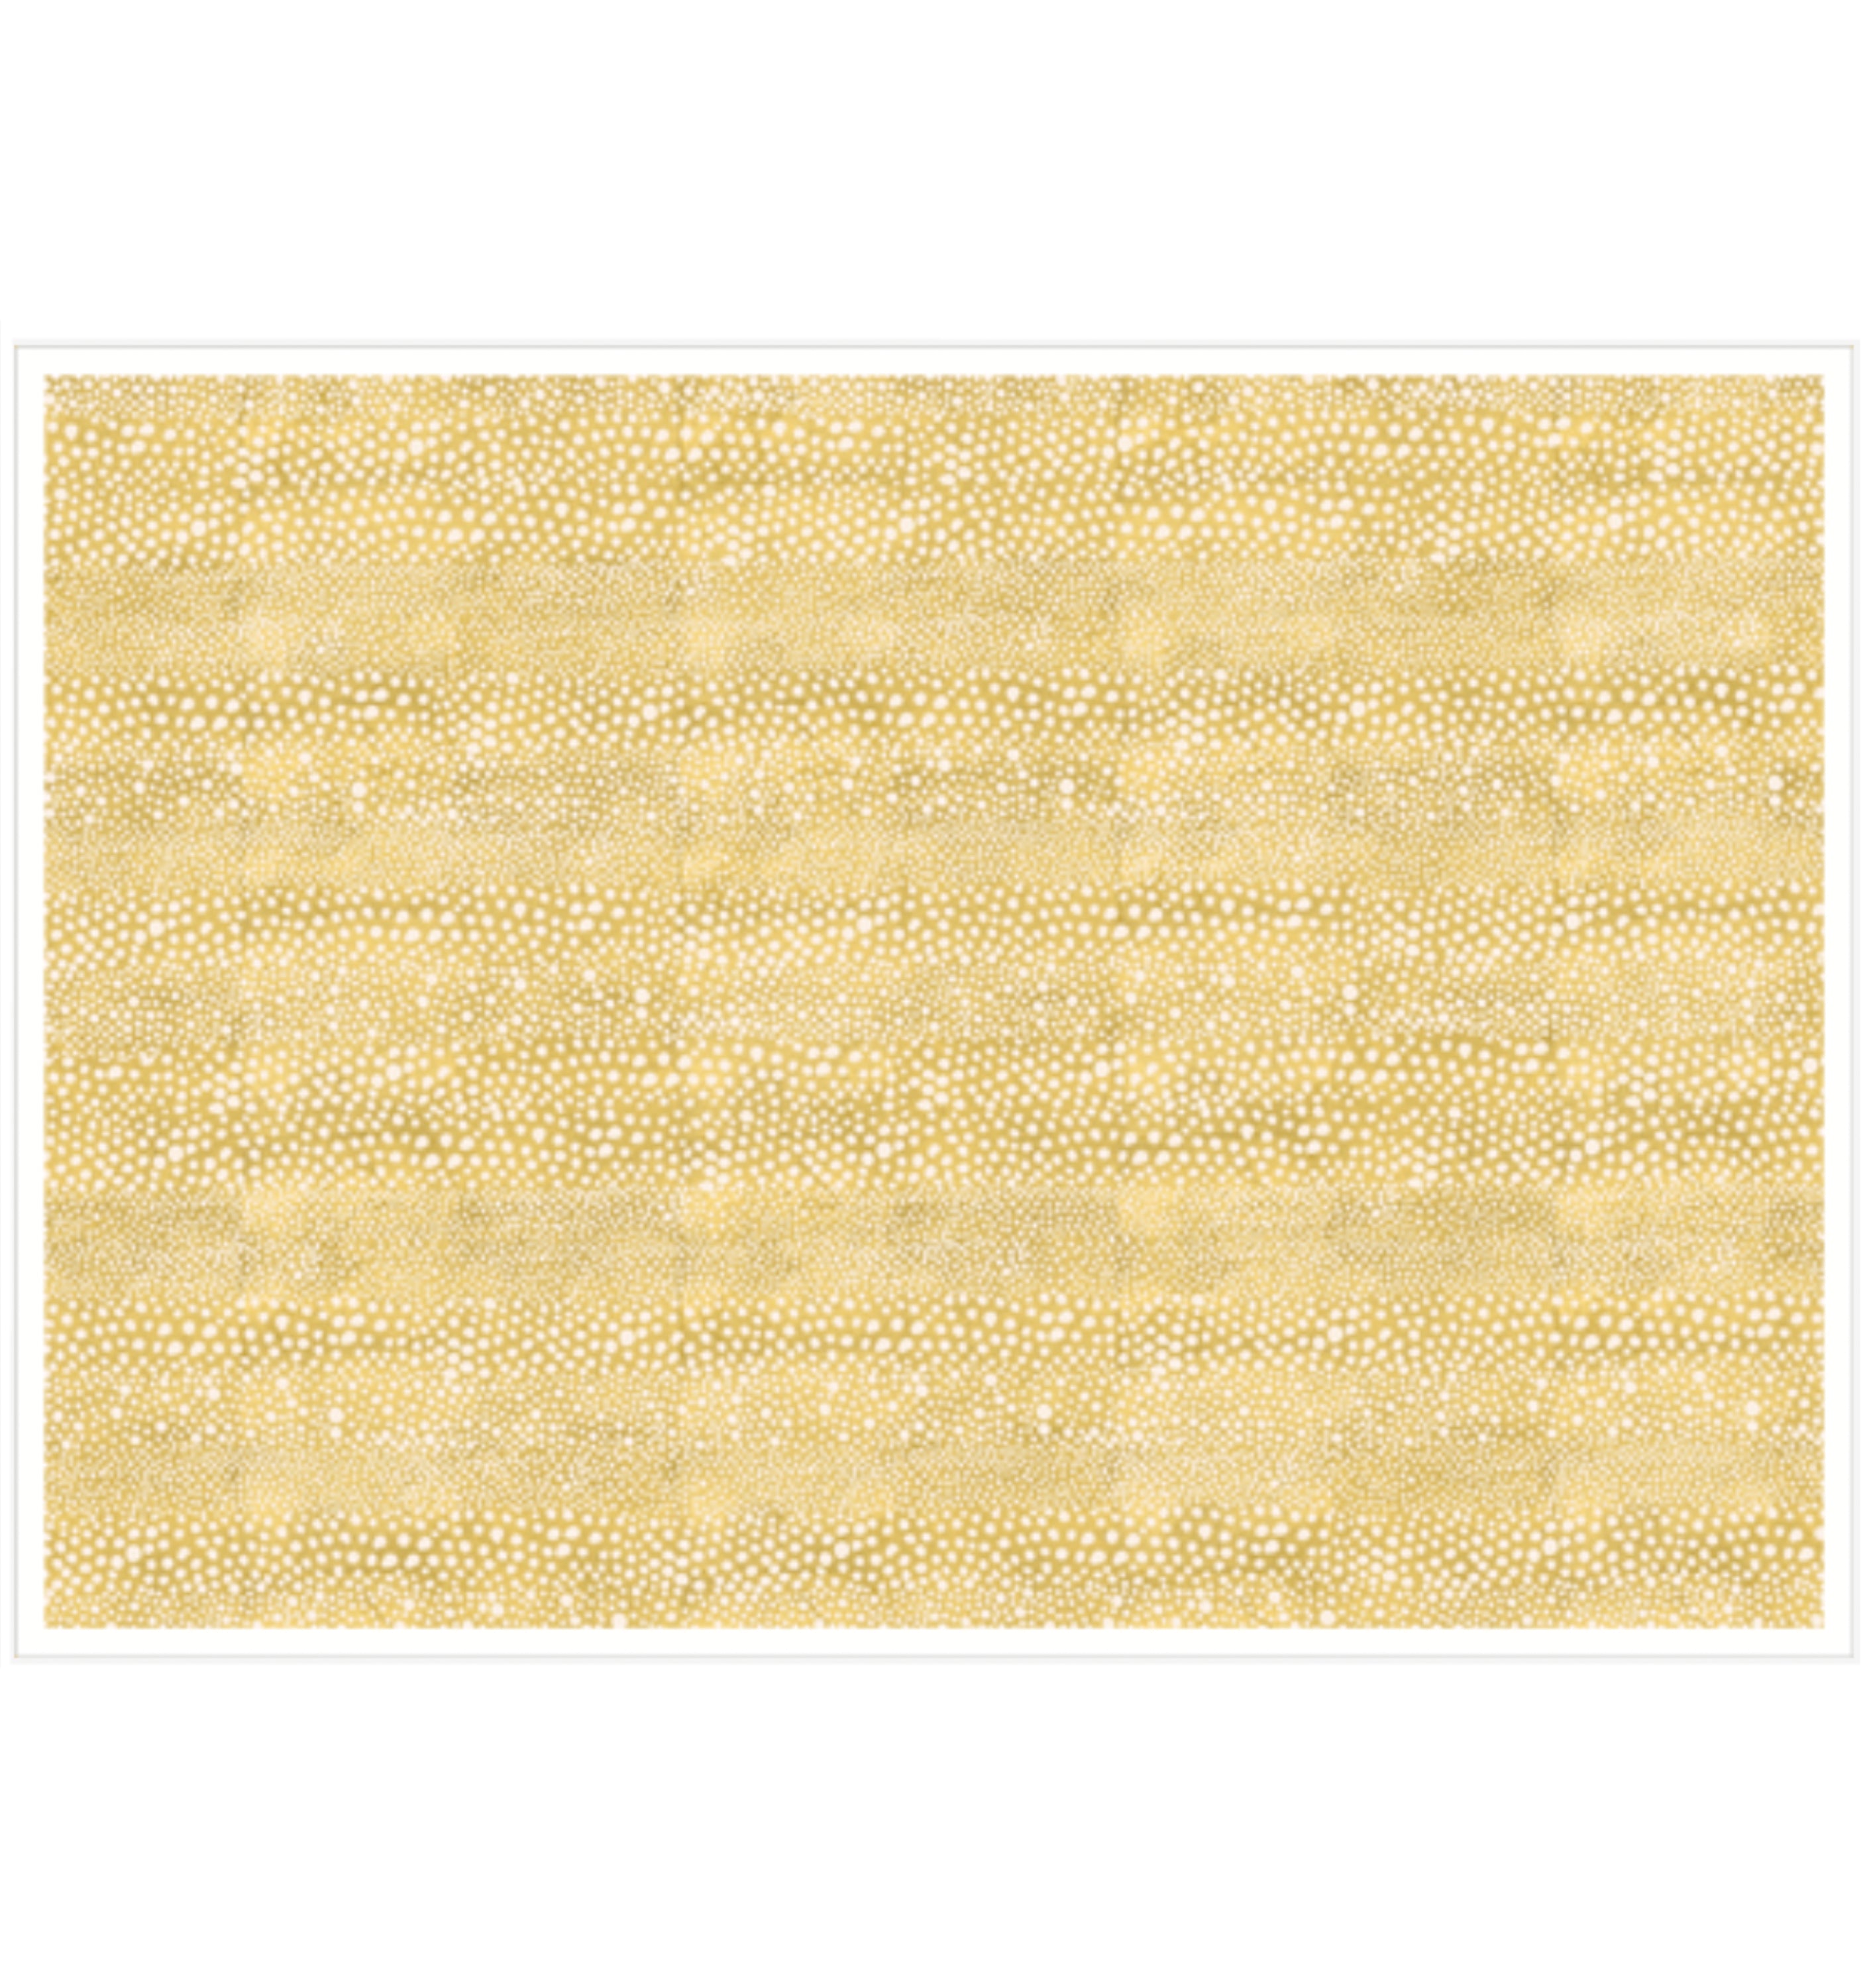 Caspari Pebble Gold Lacquer Large Rectangle Tray – 21” x 15”